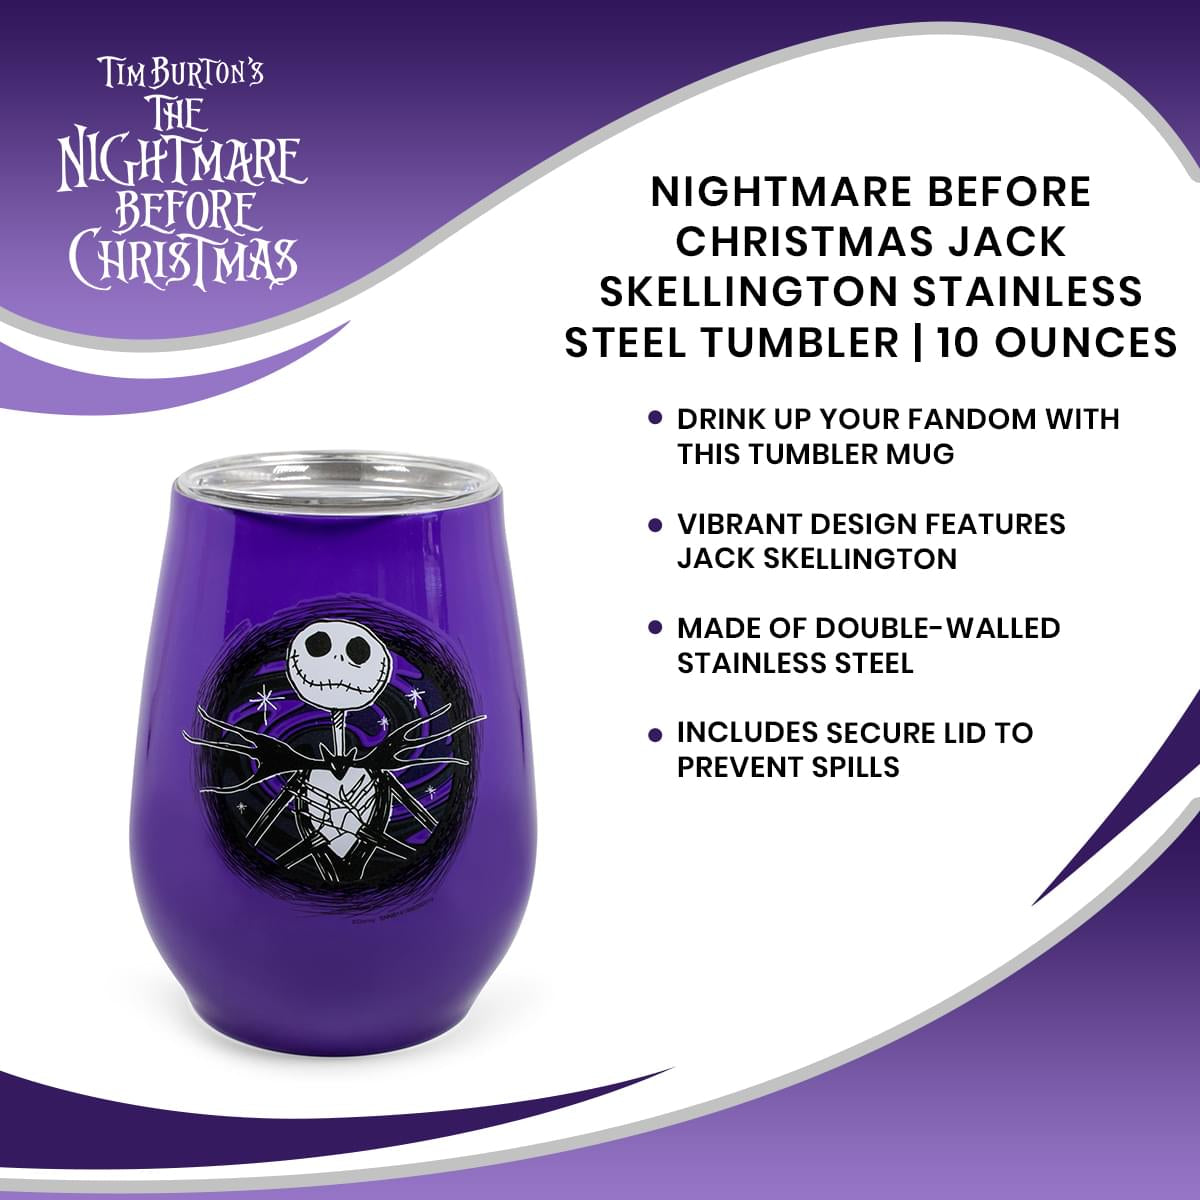 Nightmare Before Christmas Jack Skellington Stainless Steel Tumbler | 10 Ounces